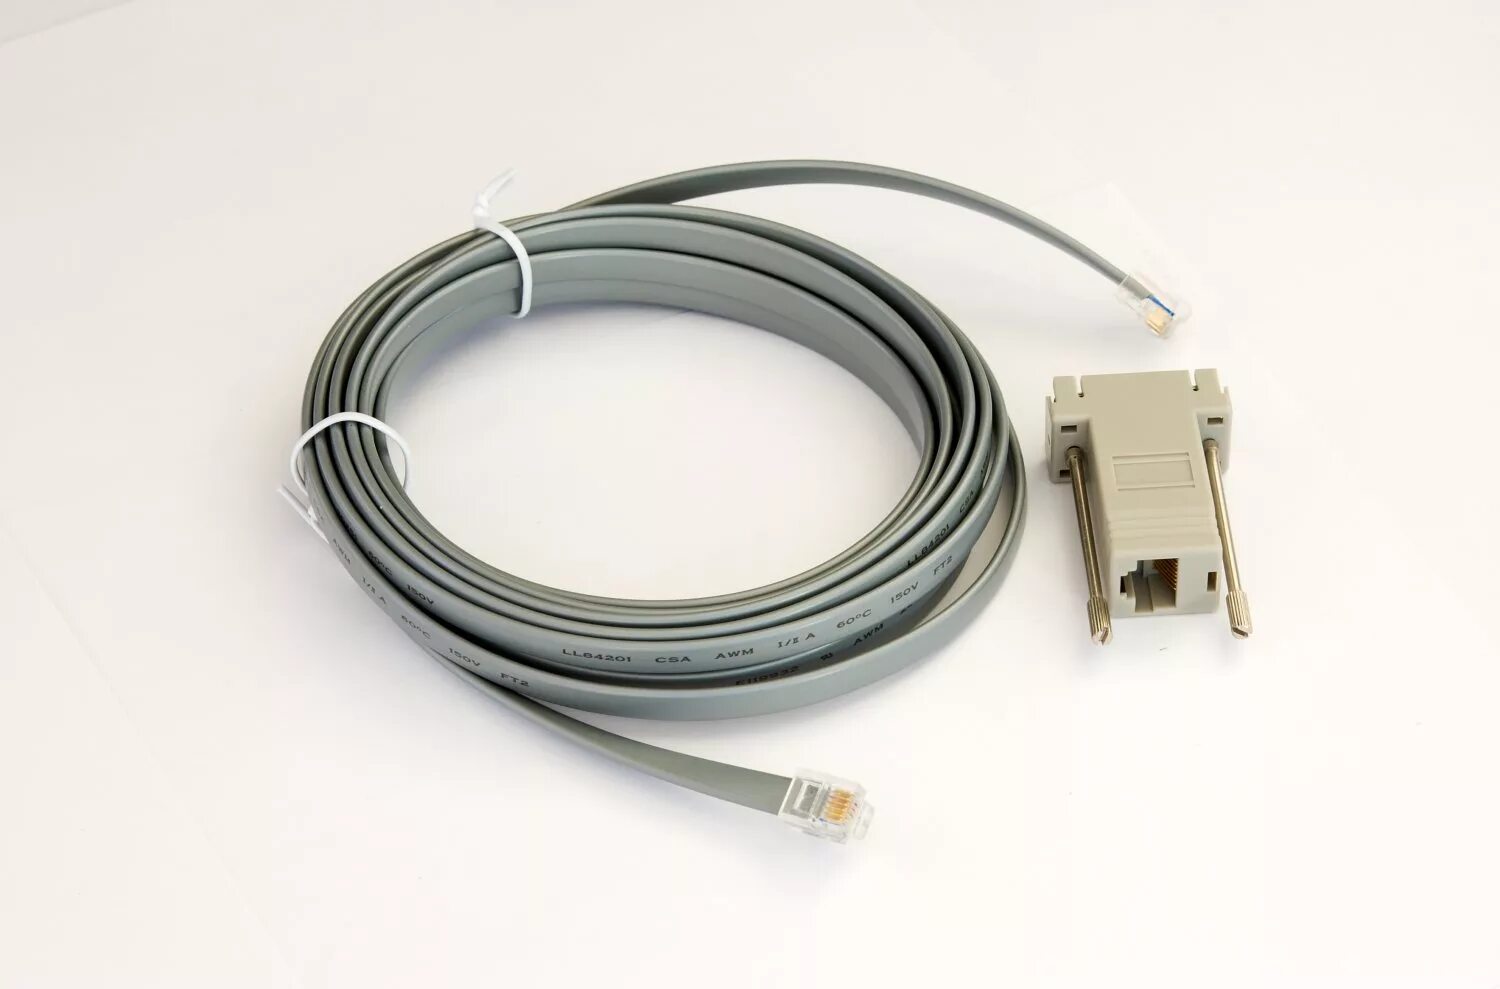 Се рс. Кабель RS-232 топаз. AX-MX-40 кабель RS-232c. Em705 кабель rs232. Кабель RS-232 для ПУ Custom vkp80iii.